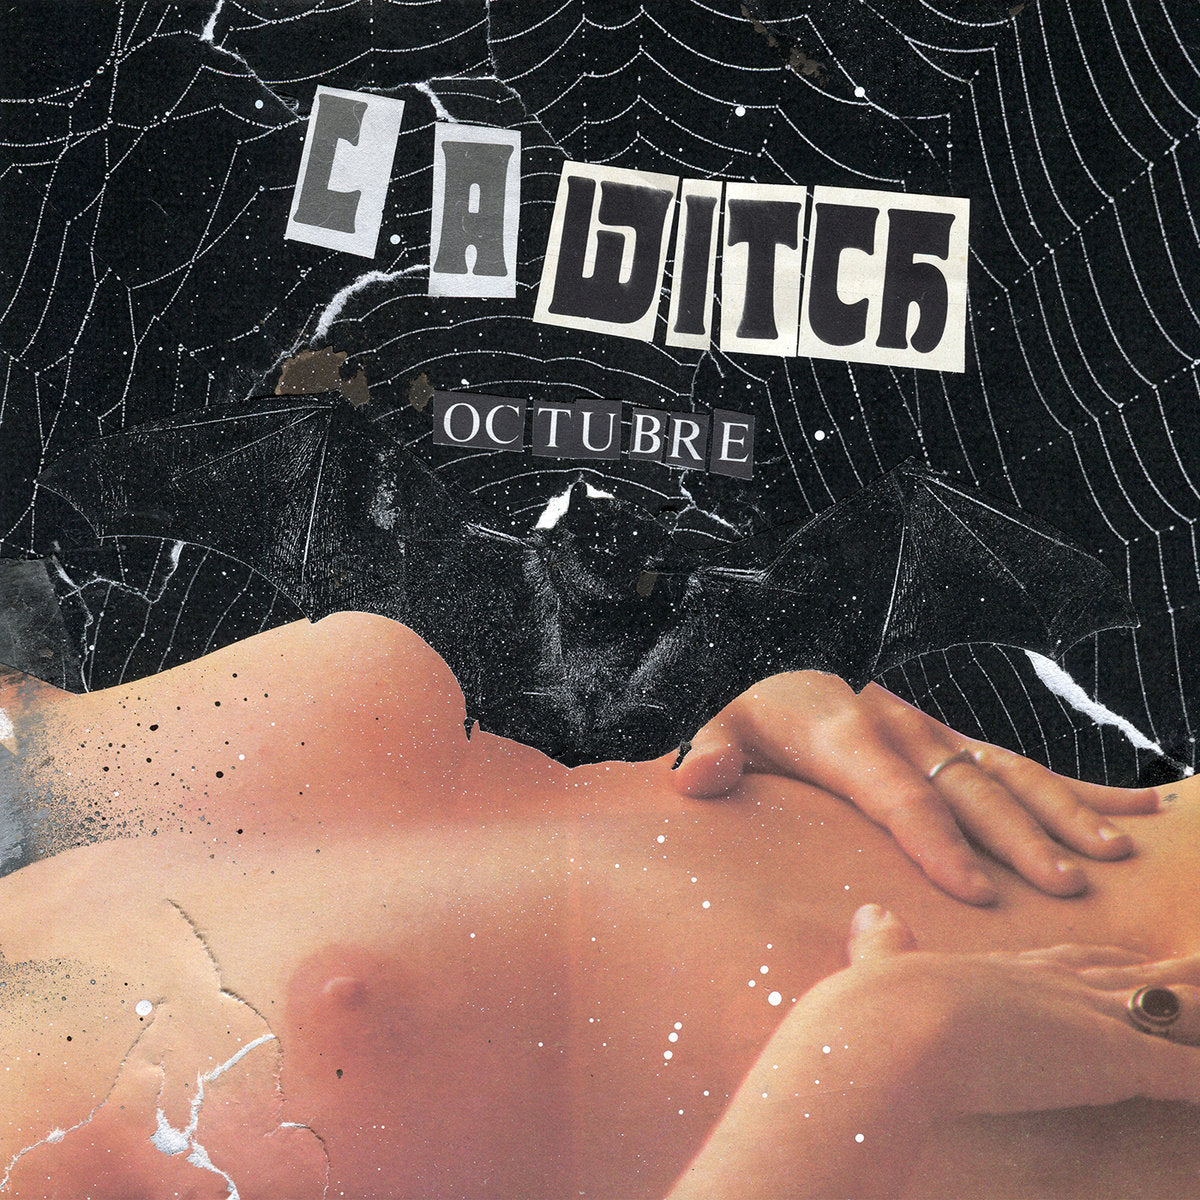 L.A. Witch - Octubre LP (Ltd Halloween Orange Vinyl Edition)